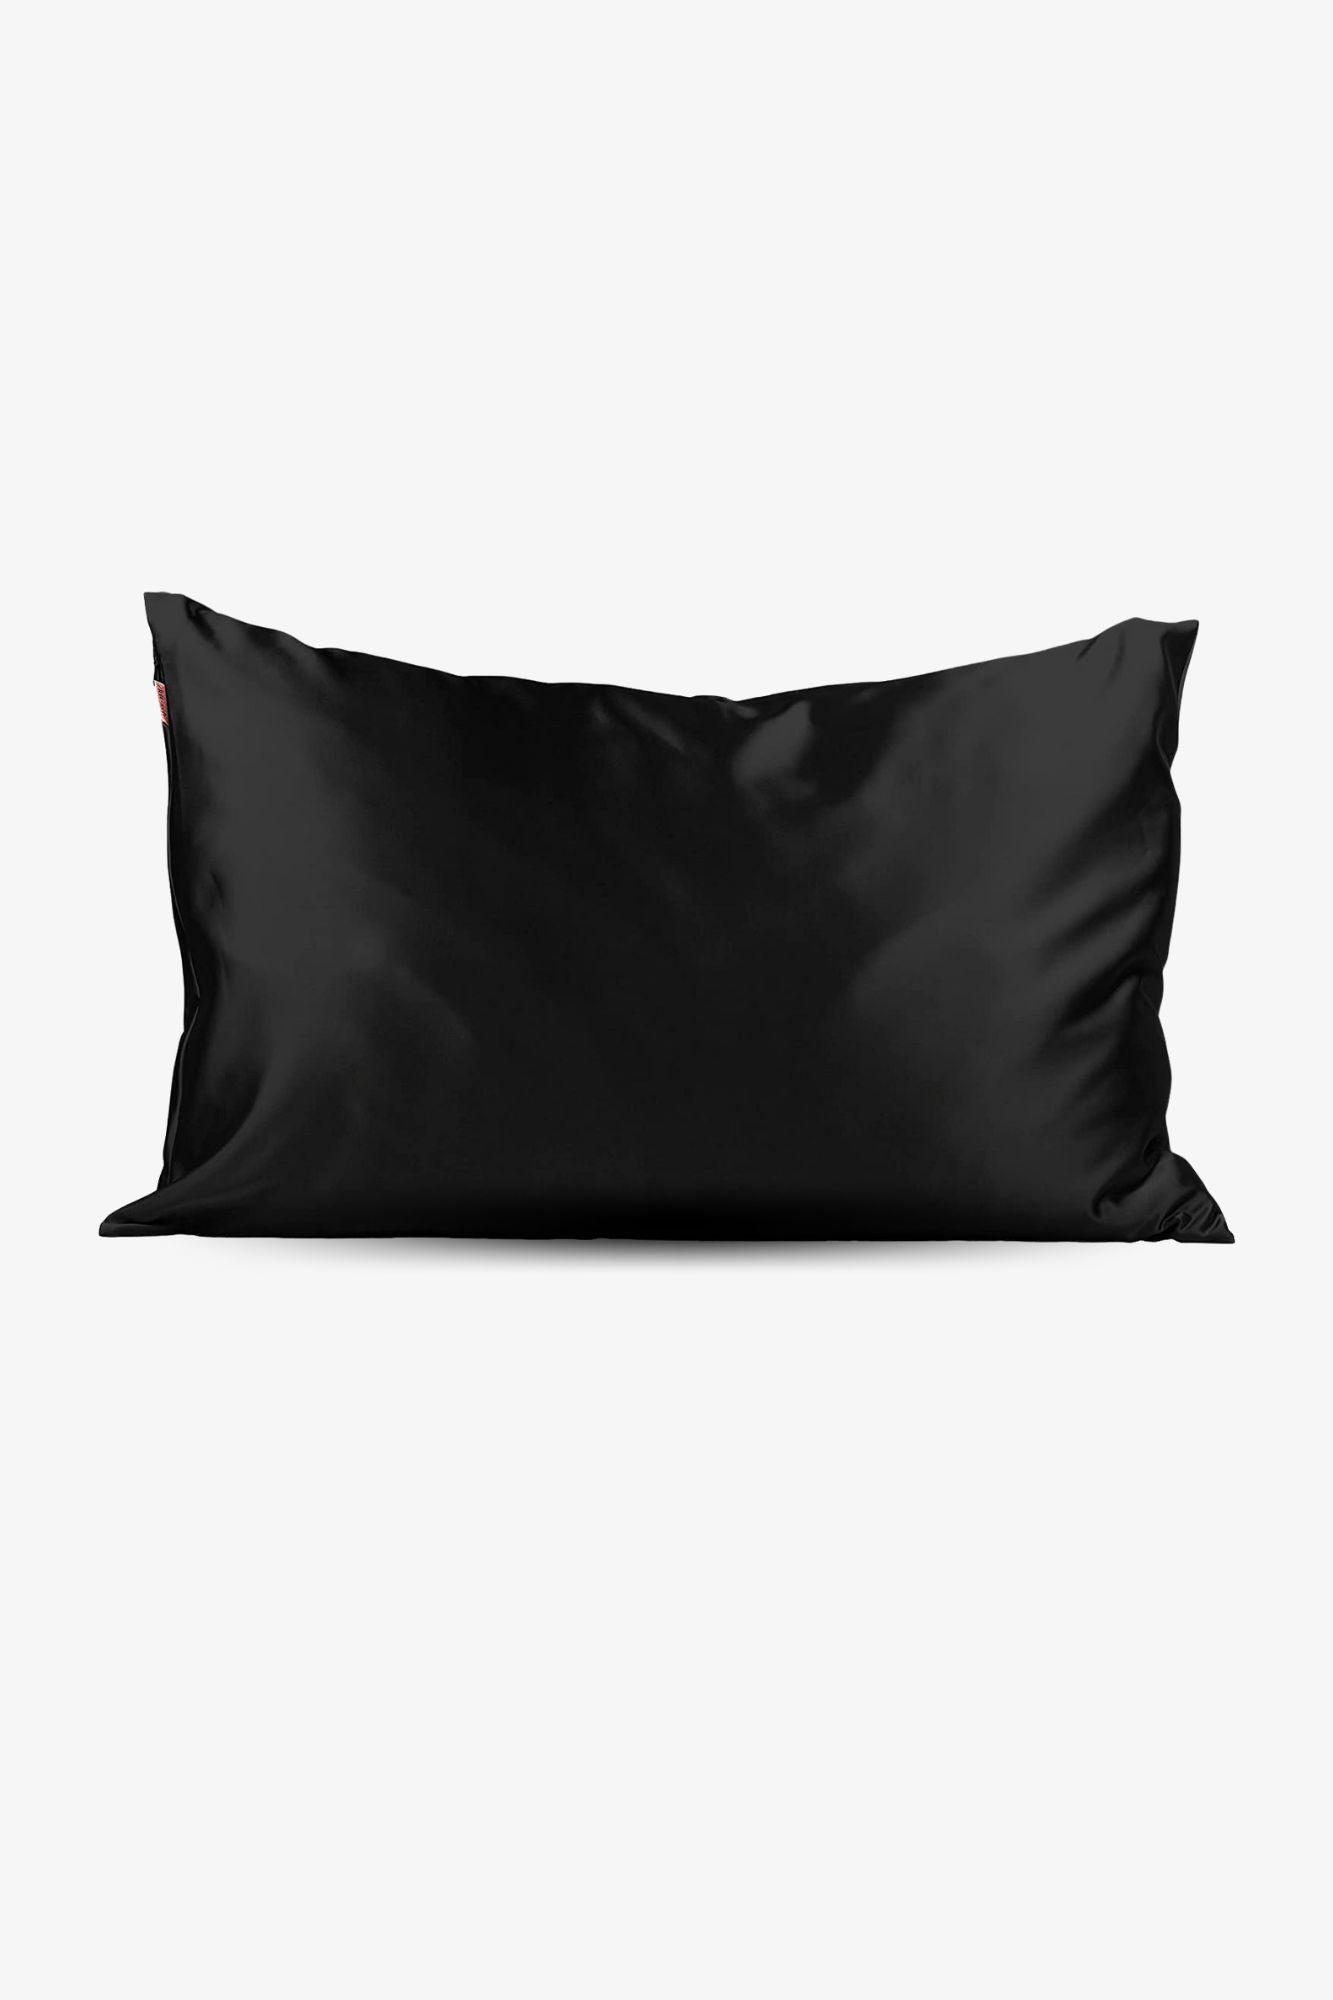 Kitsch - Black Satin Pillowcase - 1pc